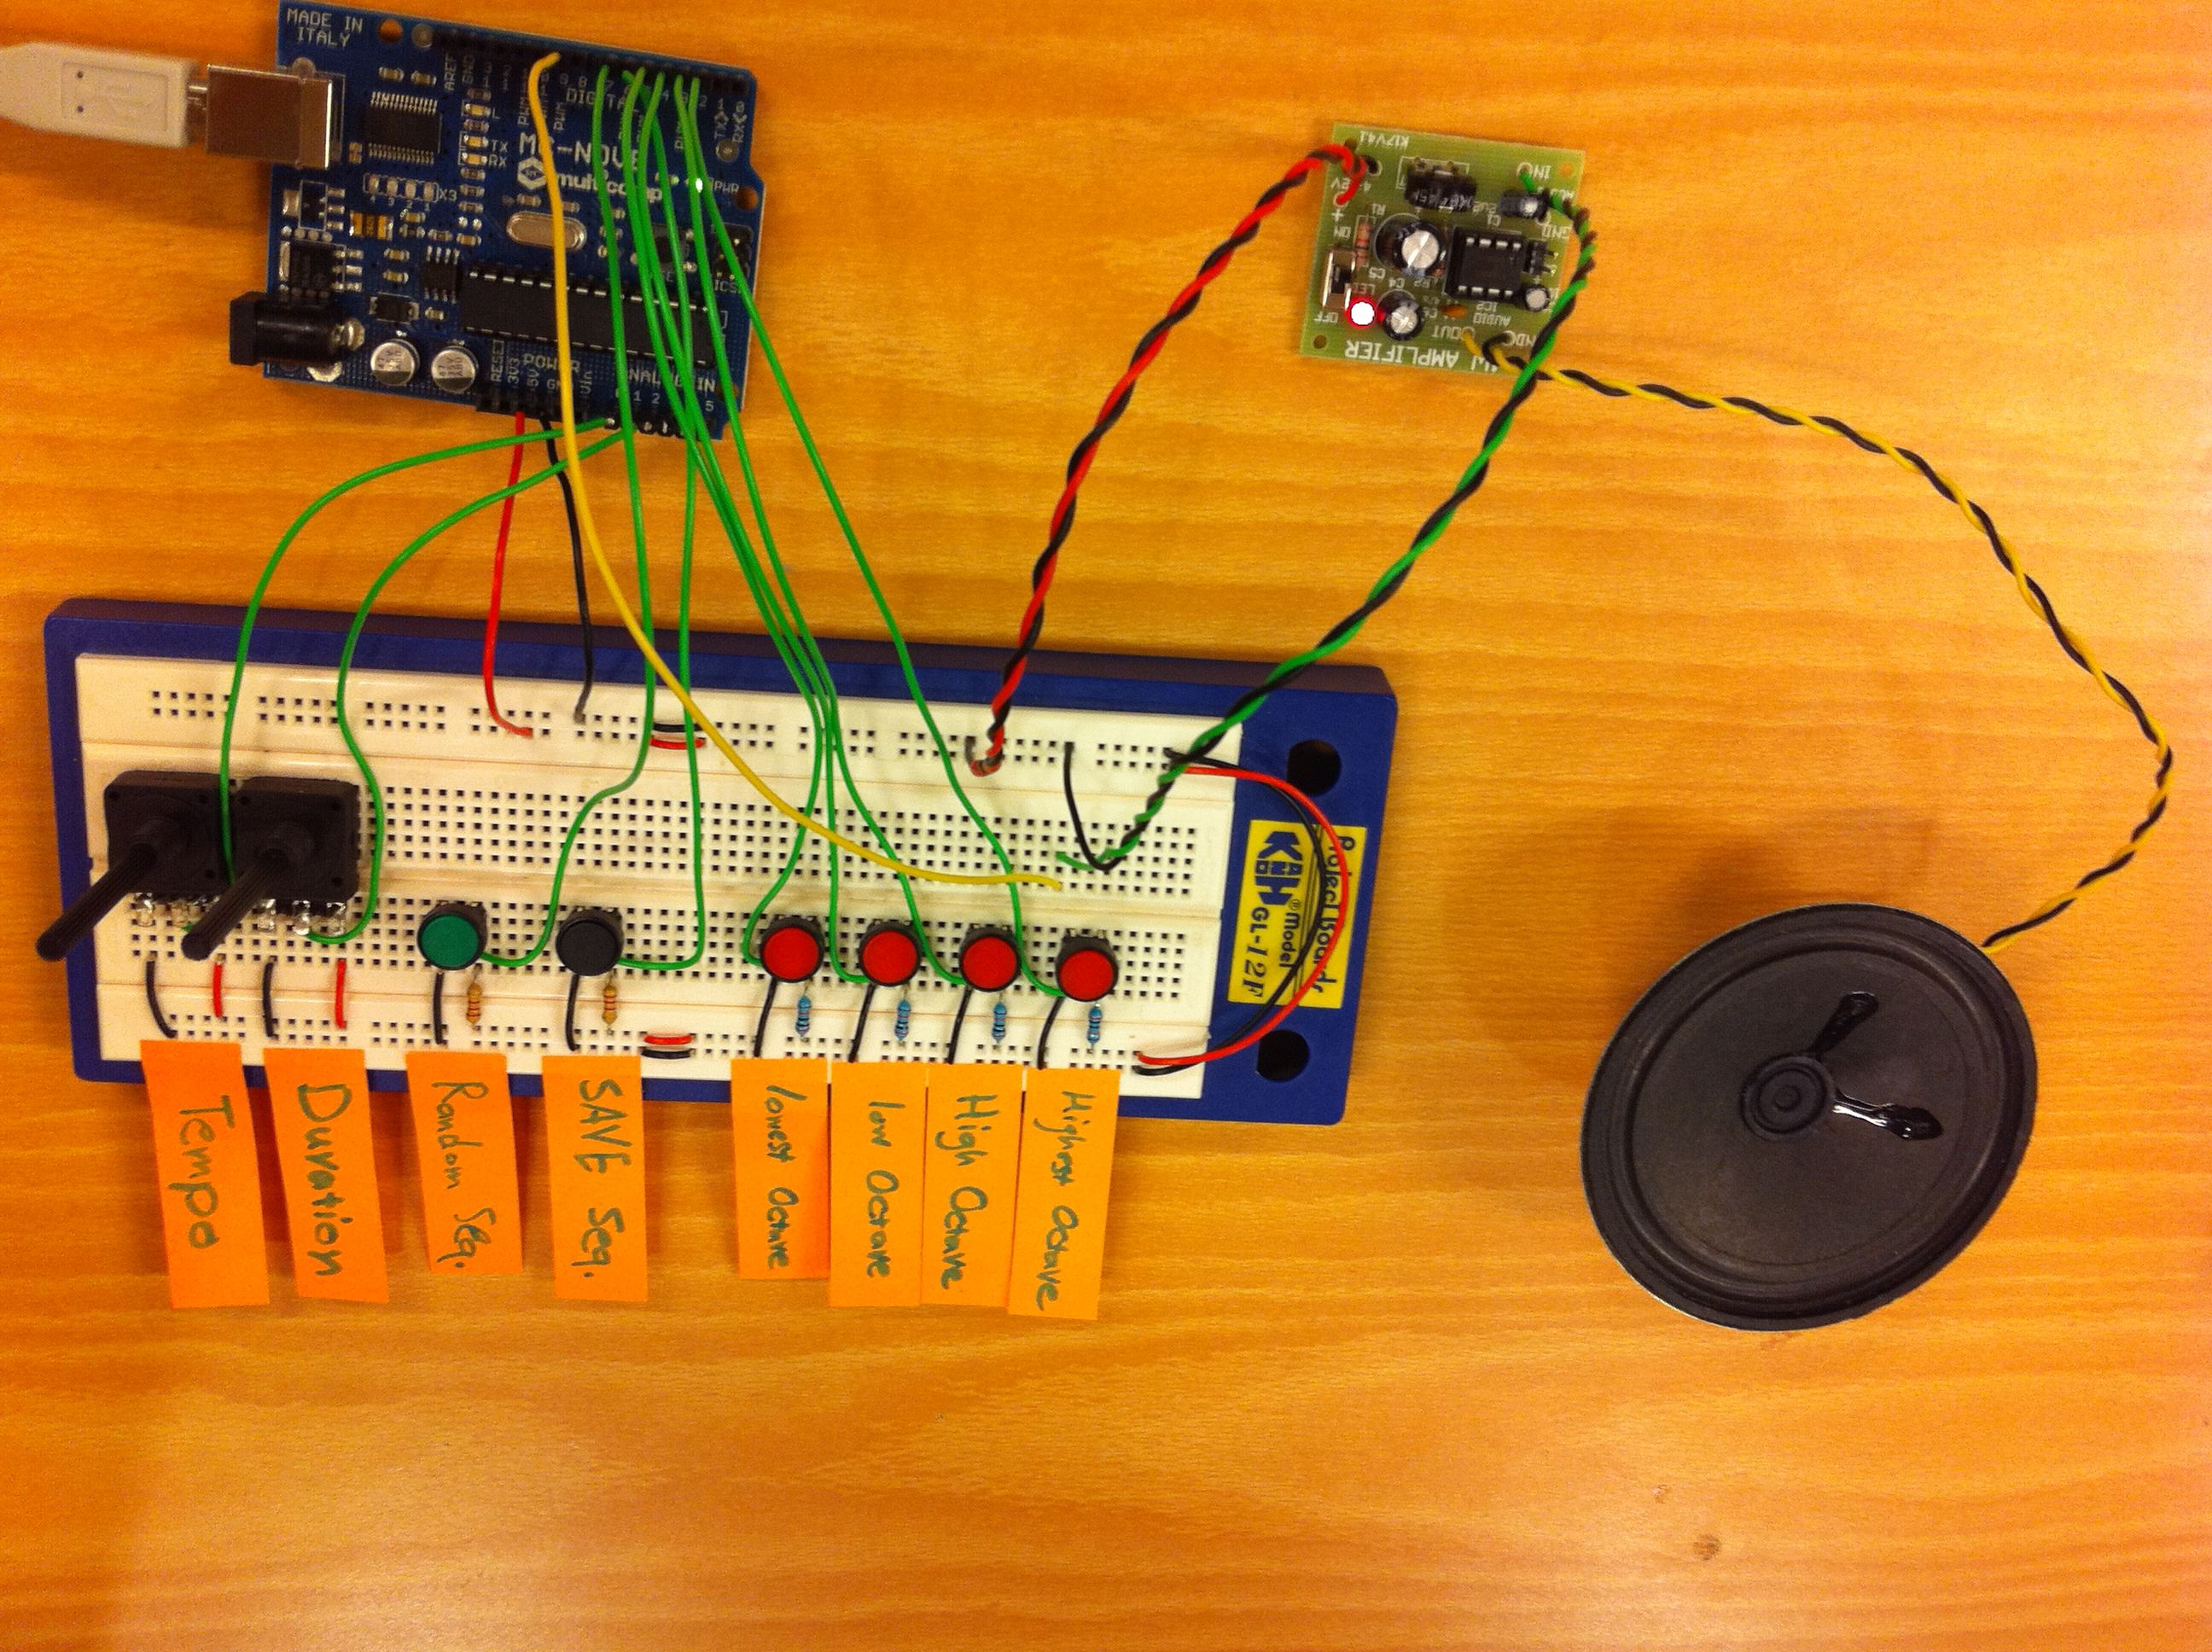 ‘Micro sequencer’ an Arduino musical instrument